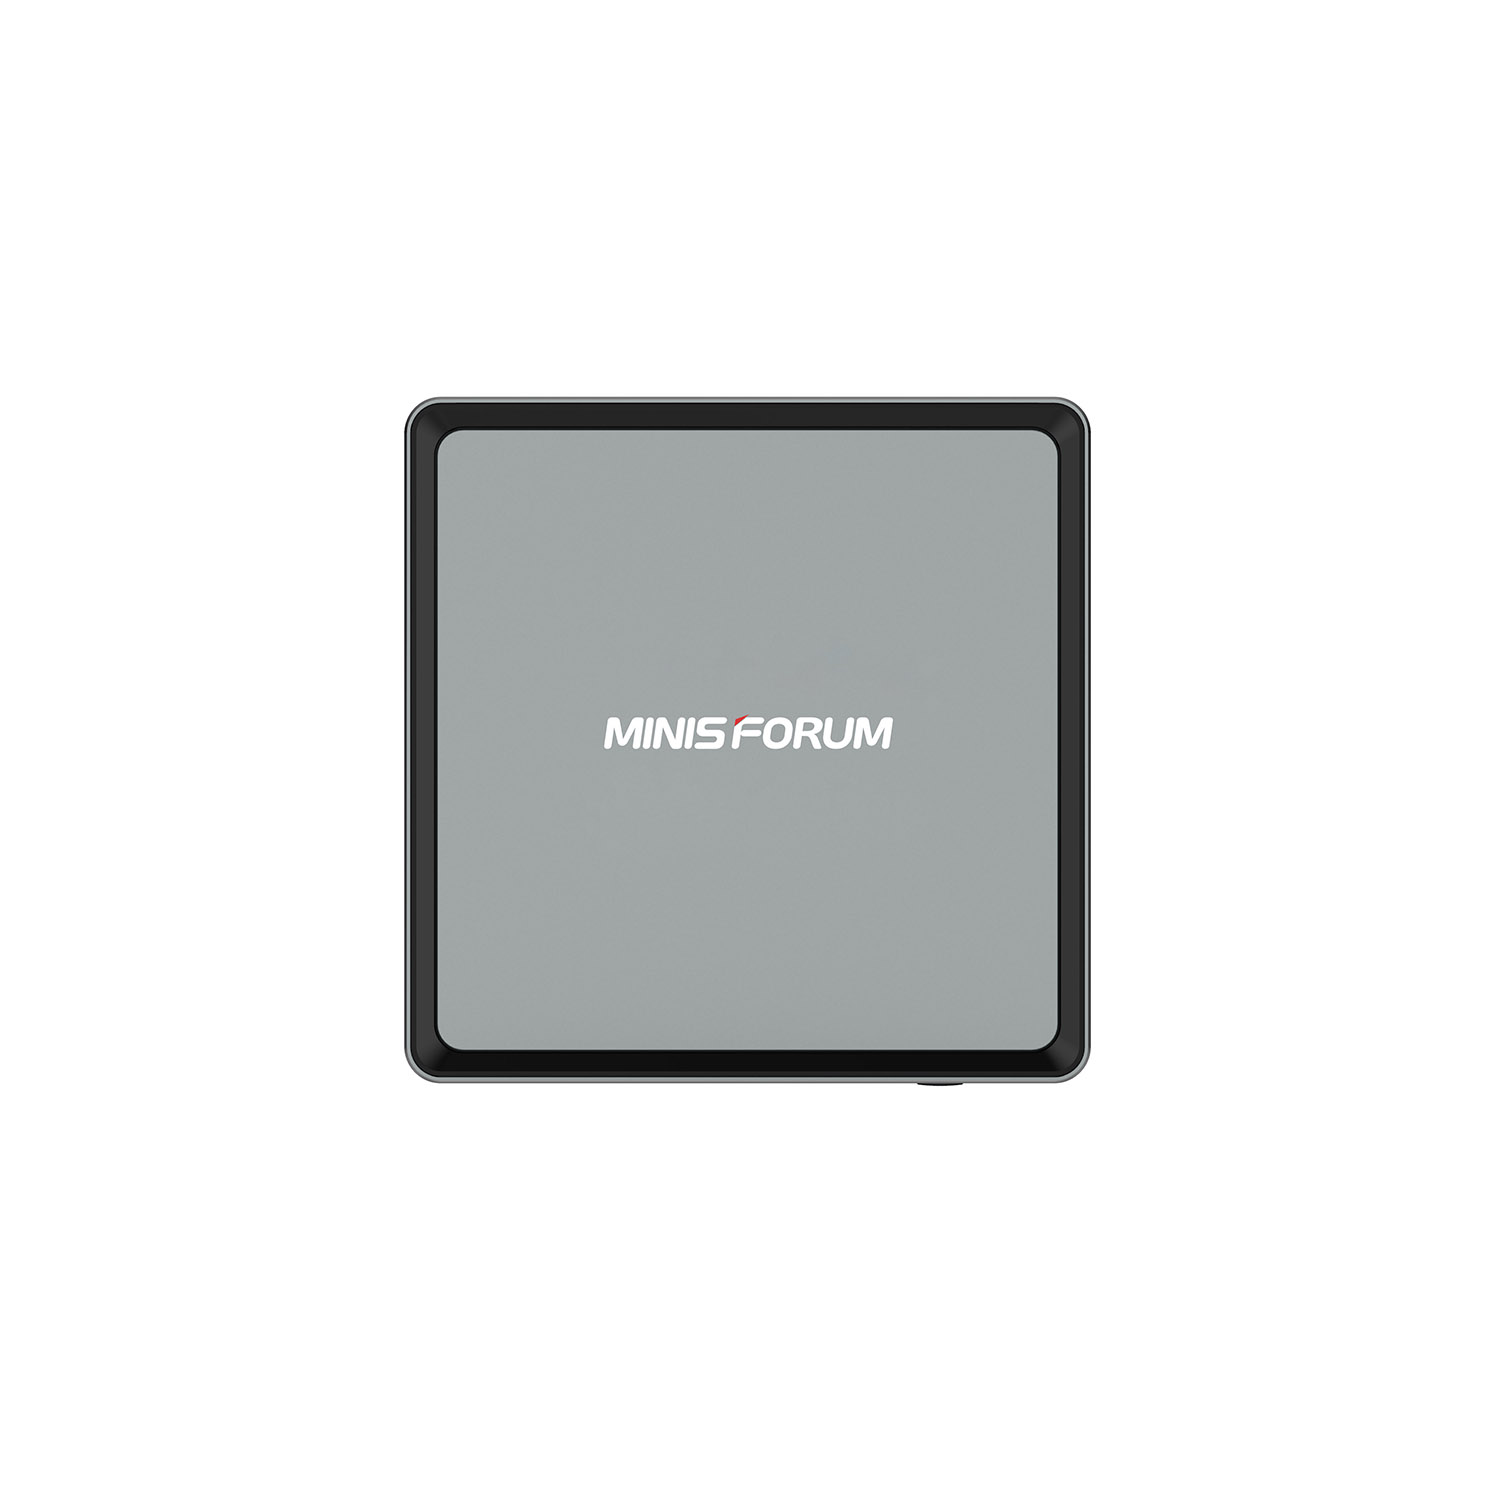 Find Minisforum UM250 AMD Ryzen Embedded V1605B 8GB DDR4 128GB SSD Mini PC Quad Core Win10 Pro 4K Output Mini Computer Desktop PC for Sale on Gipsybee.com with cryptocurrencies